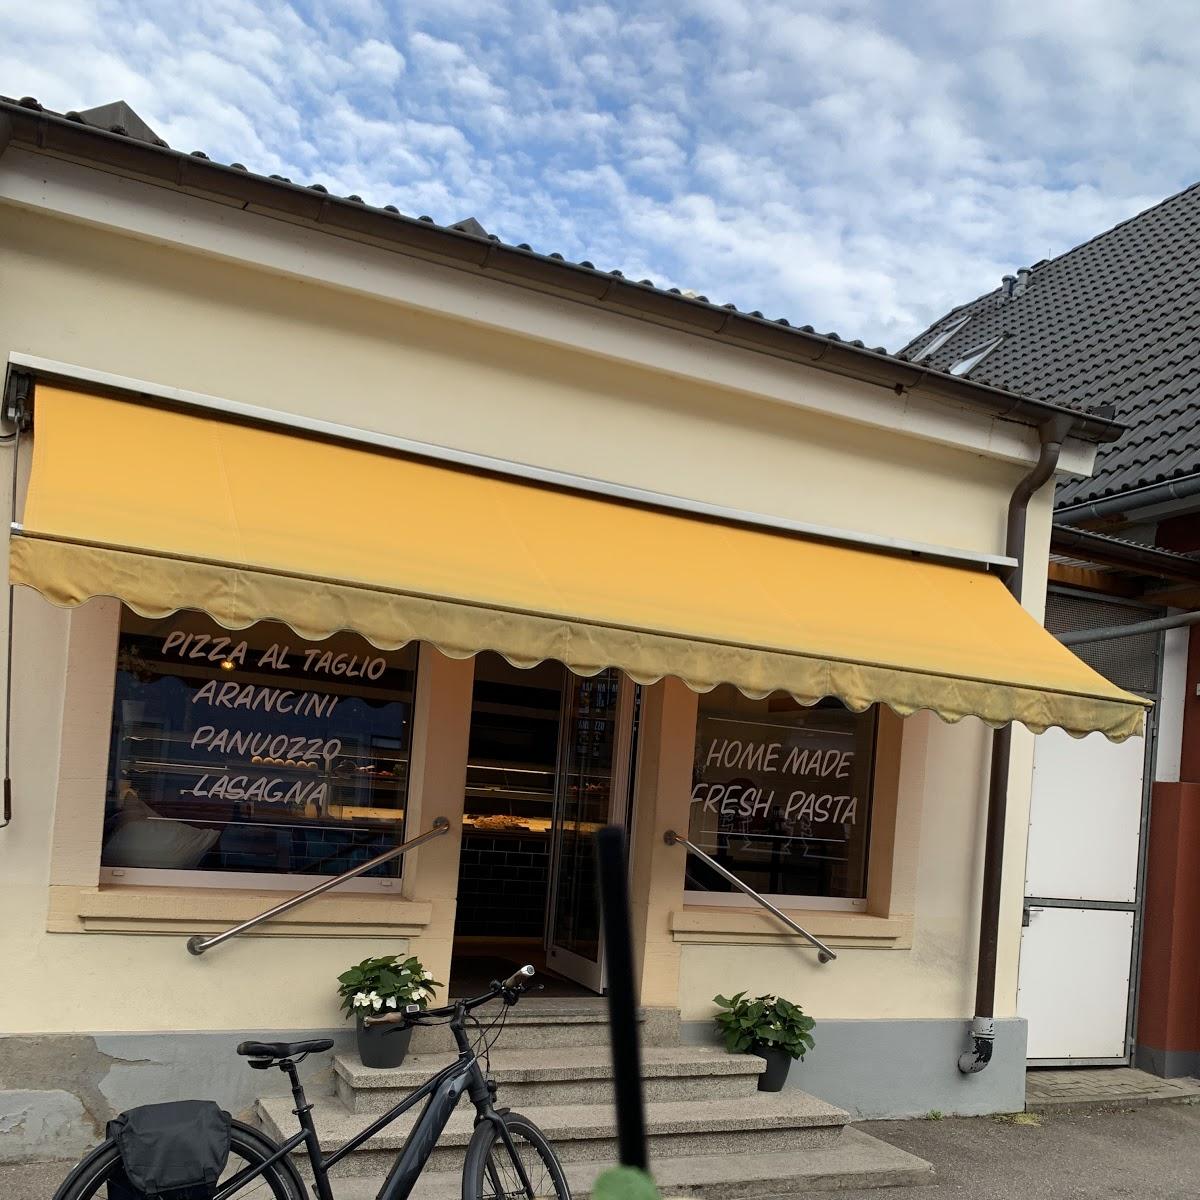 Restaurant "Pastevai" in Freiburg im Breisgau